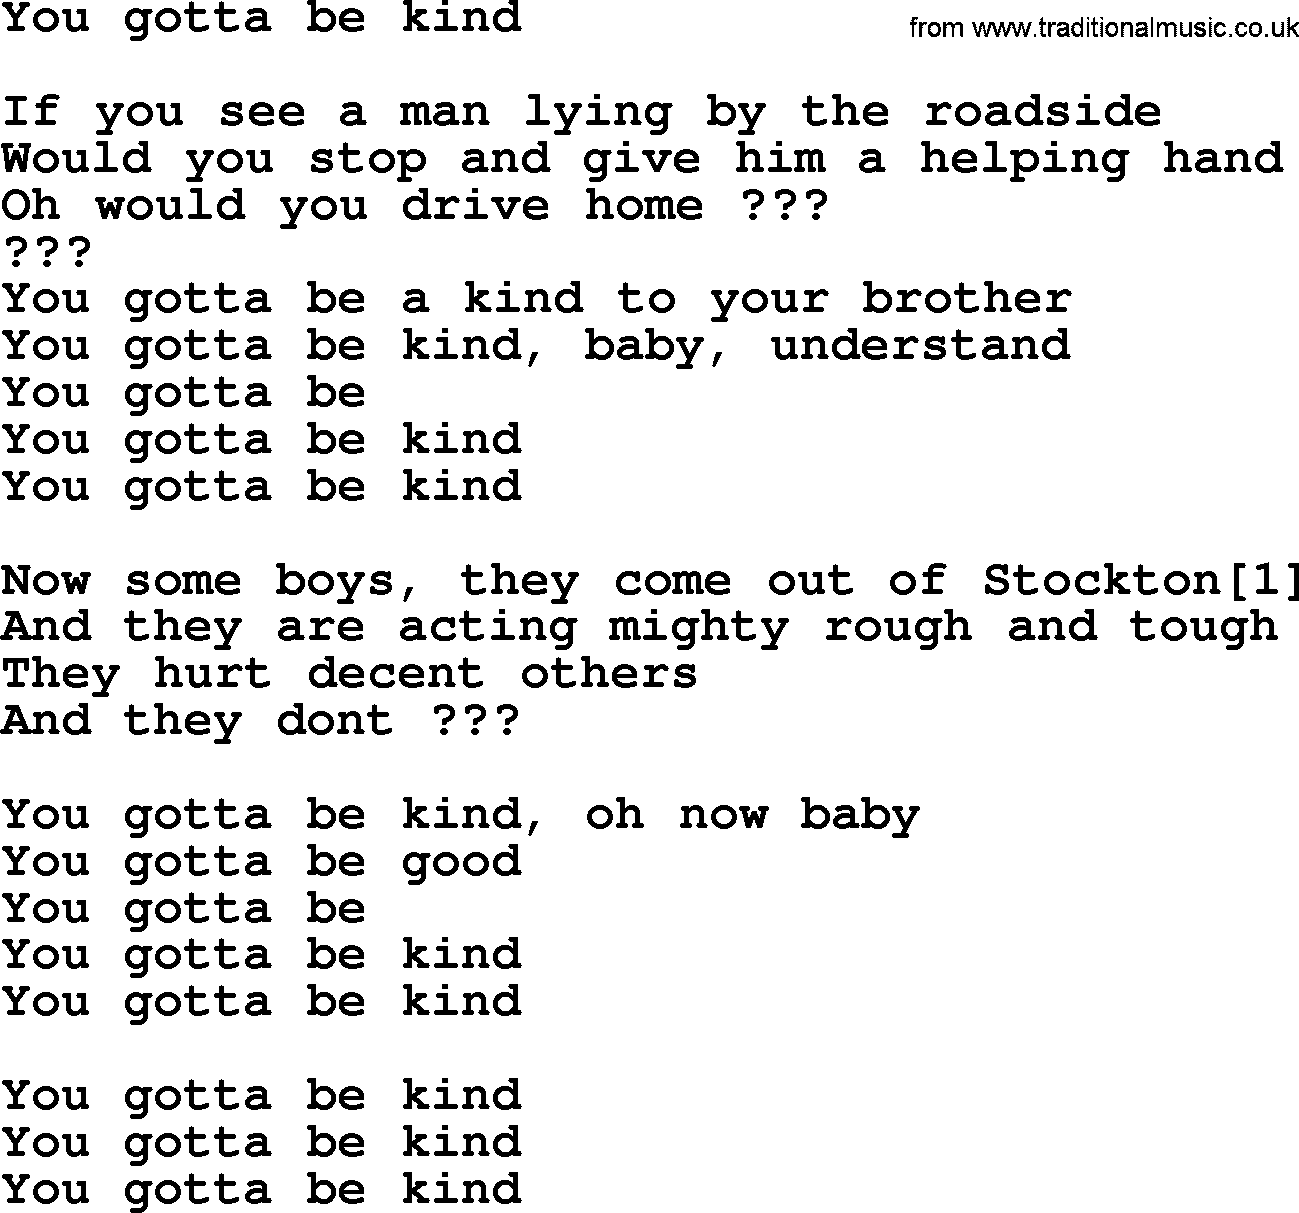 Bruce Springsteen song: You Gotta Be Kind lyrics